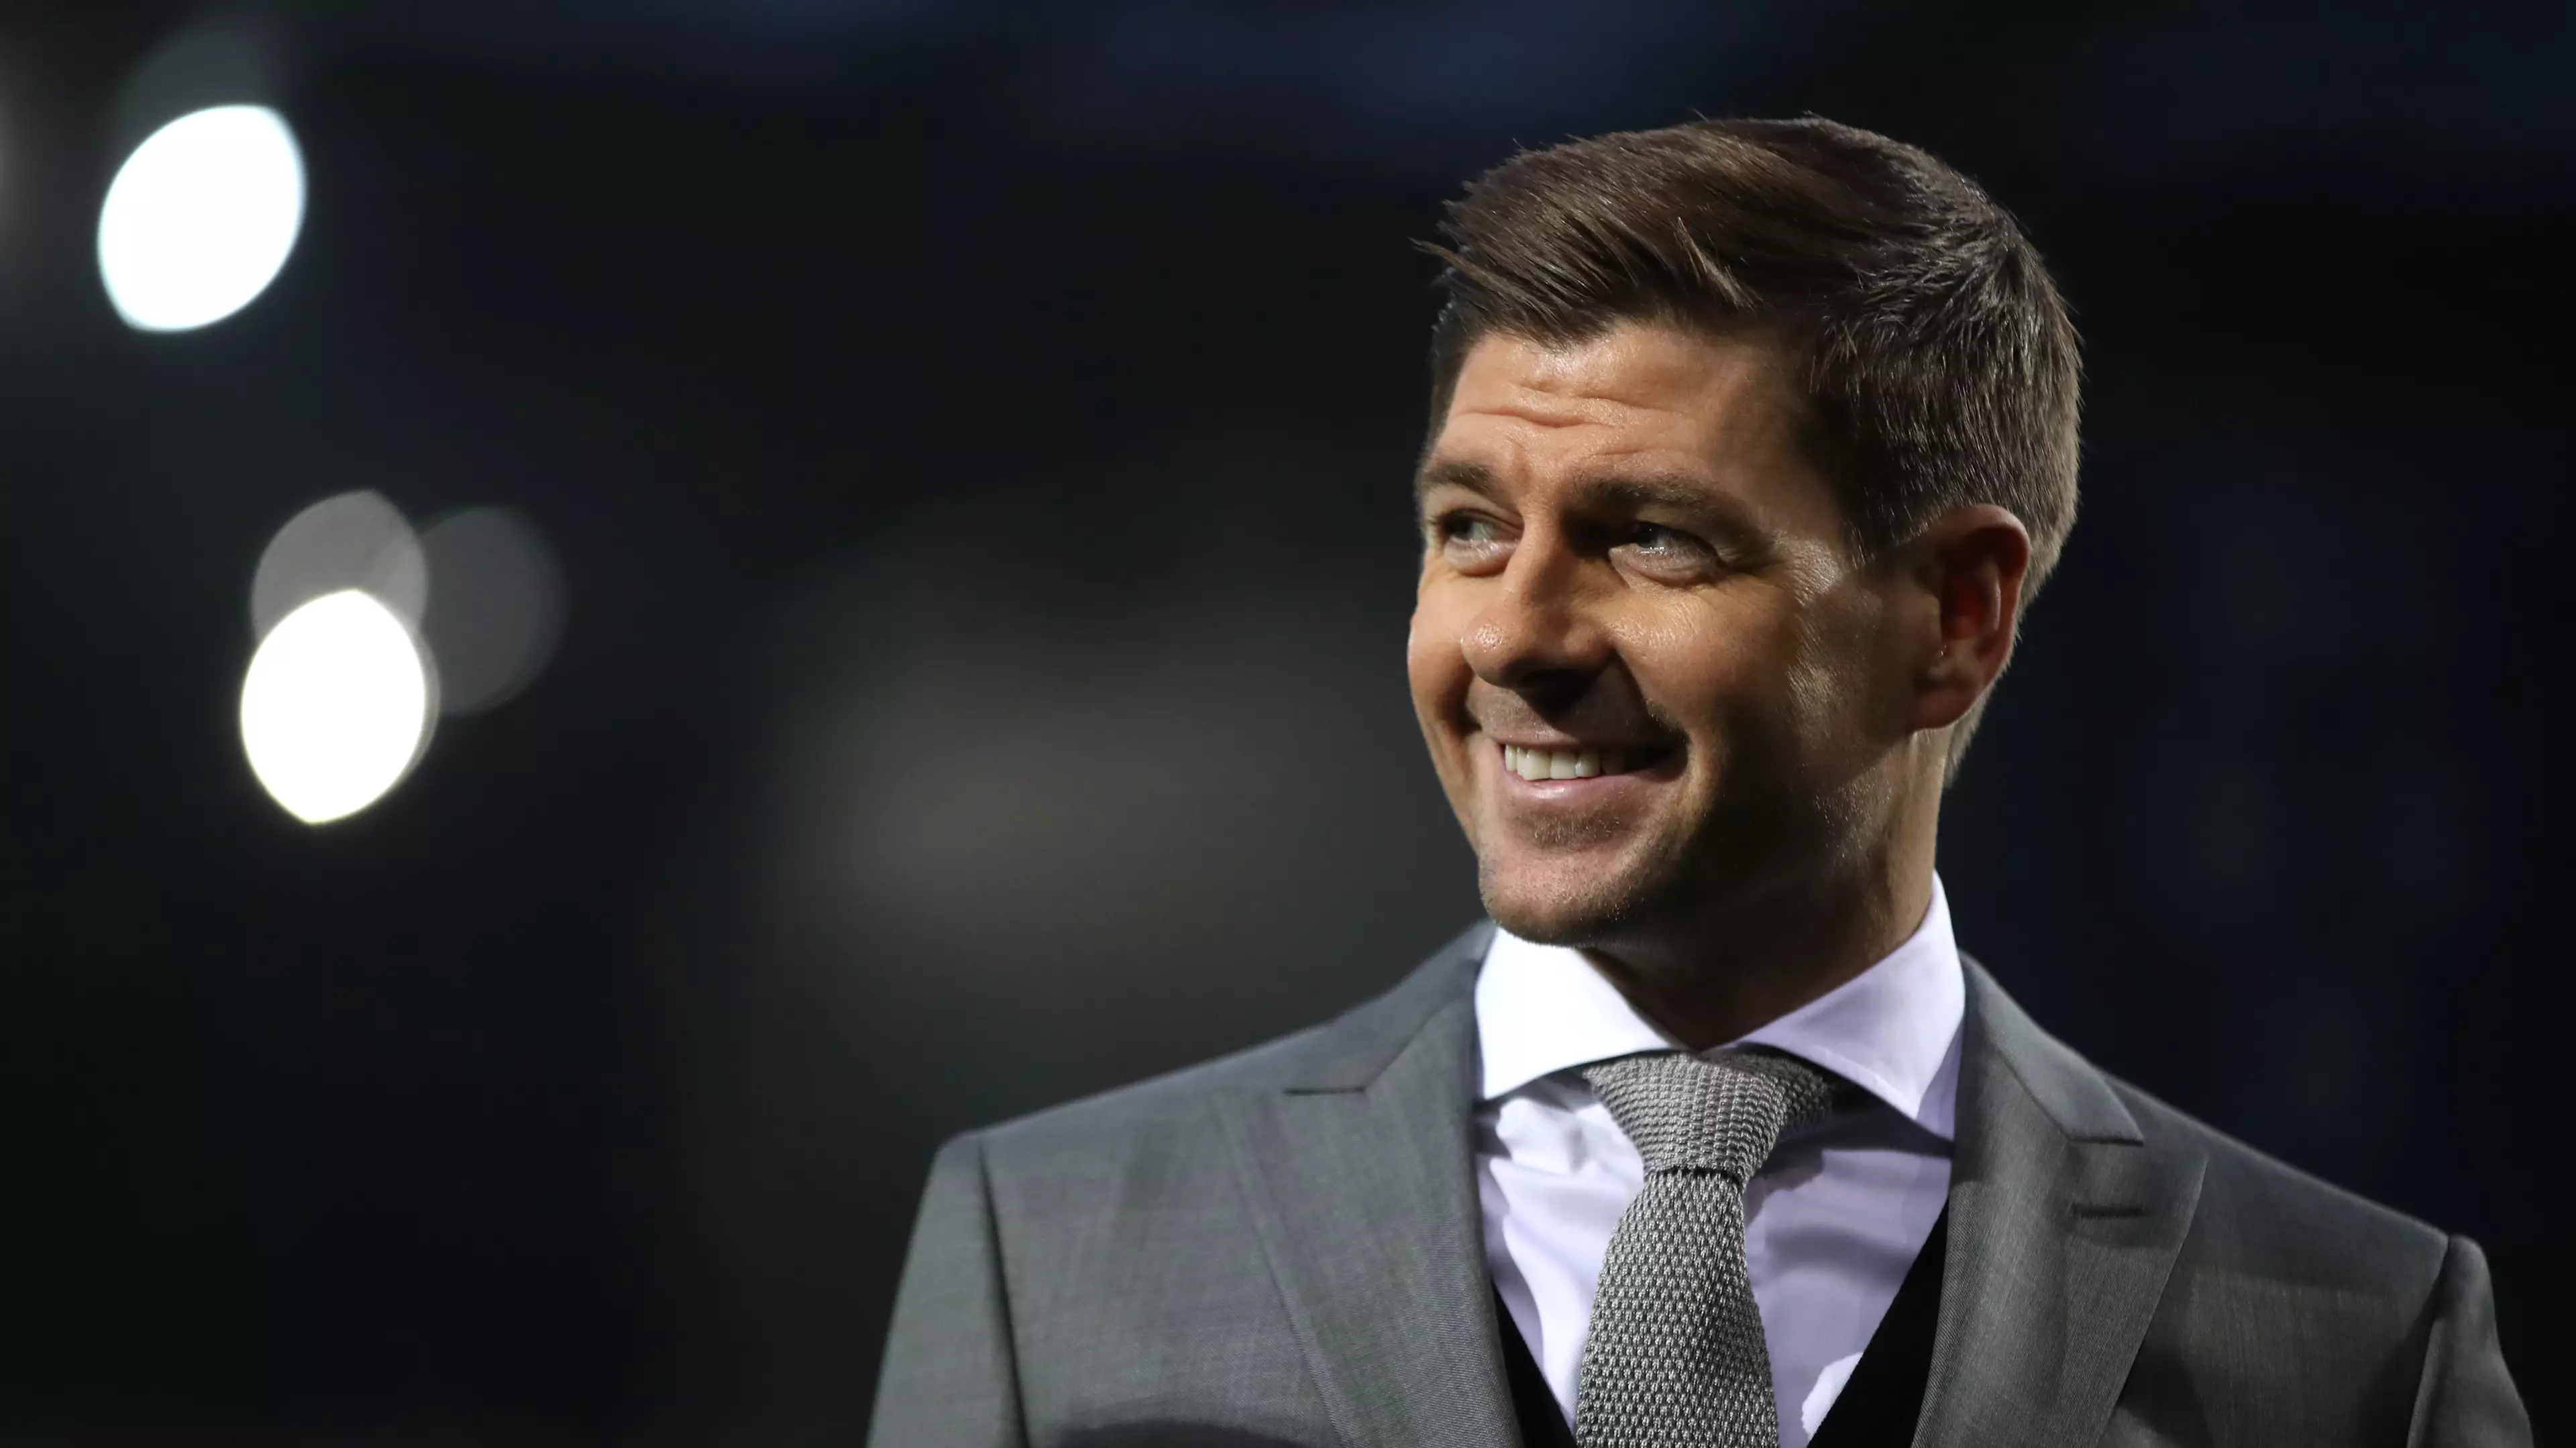 Steven Gerrard Names The Striker He Wants To Win The Golden Boot